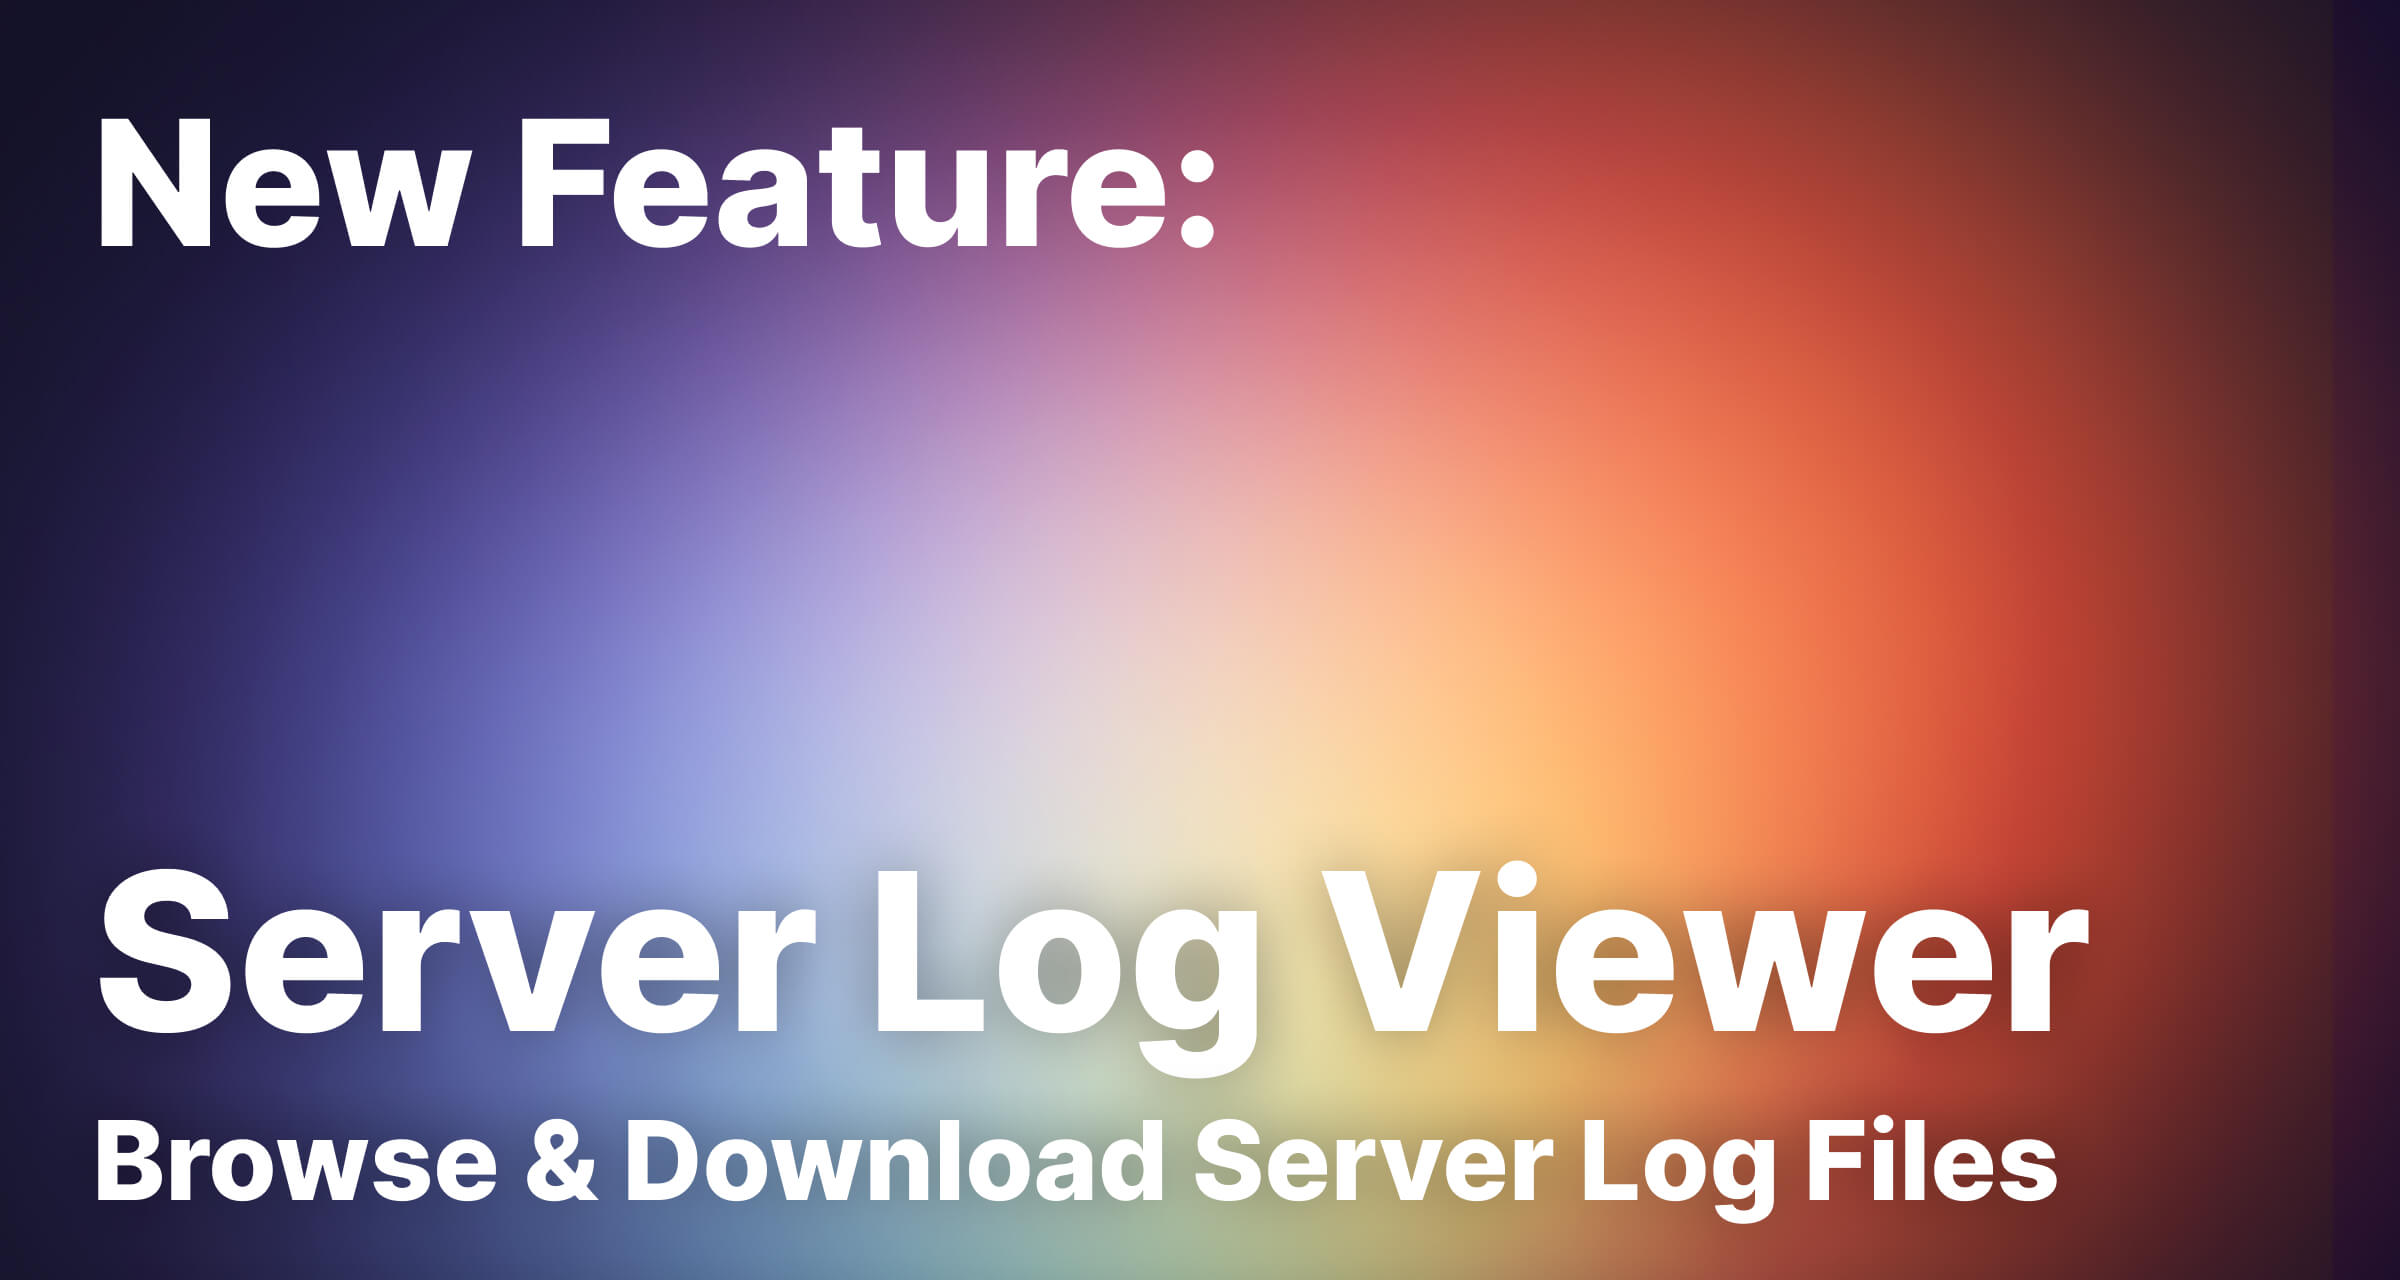 New Feature: Server Log Viewer